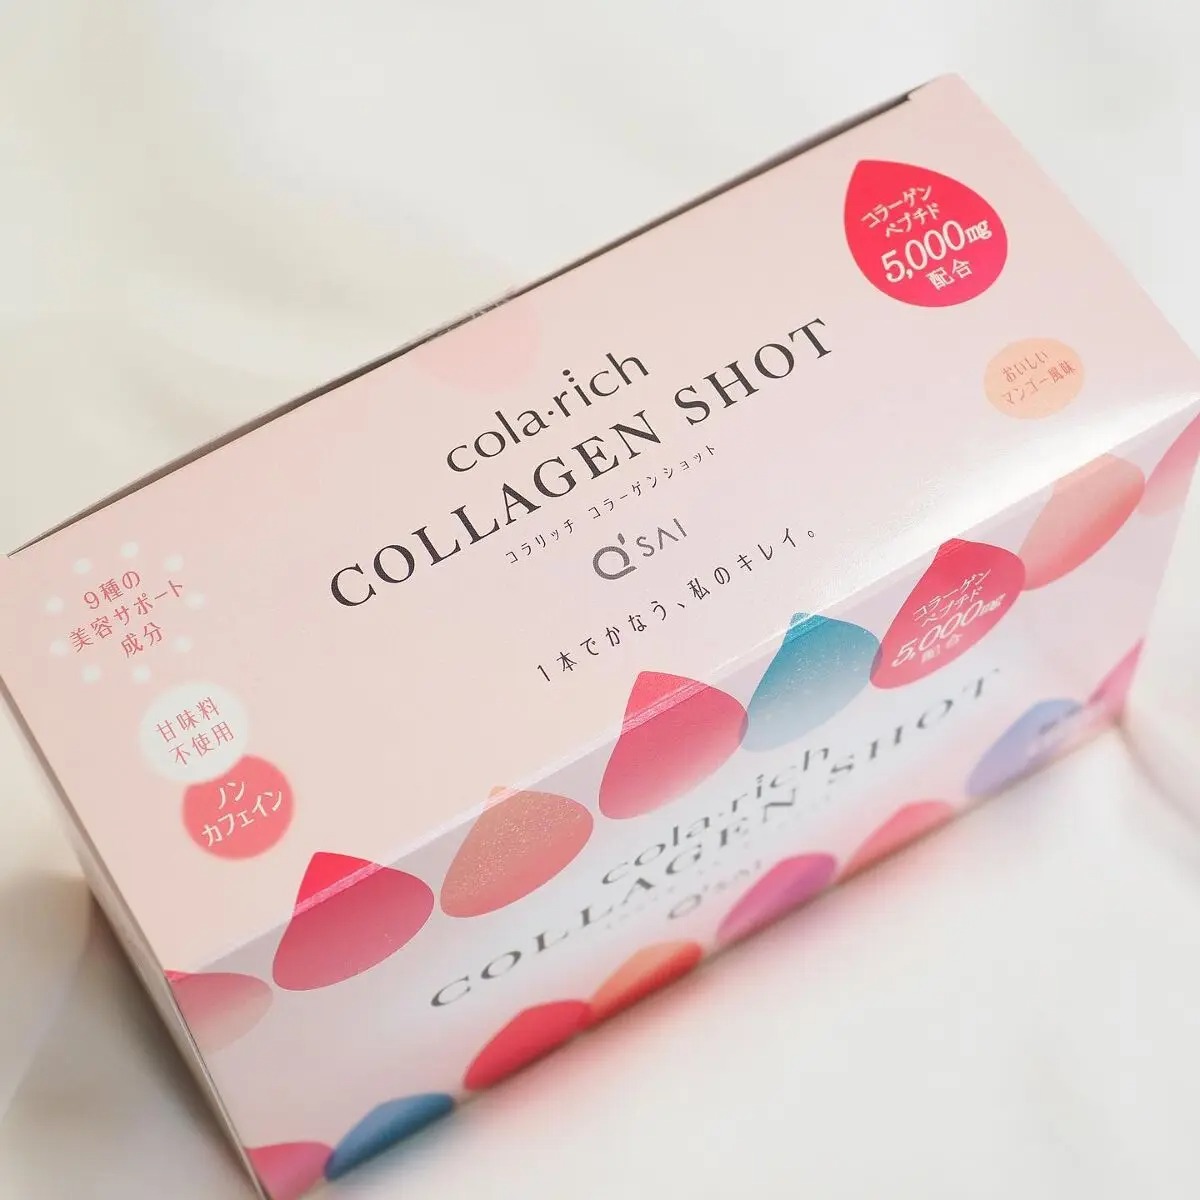 review cola rich collagen shot qsai nhat ban new